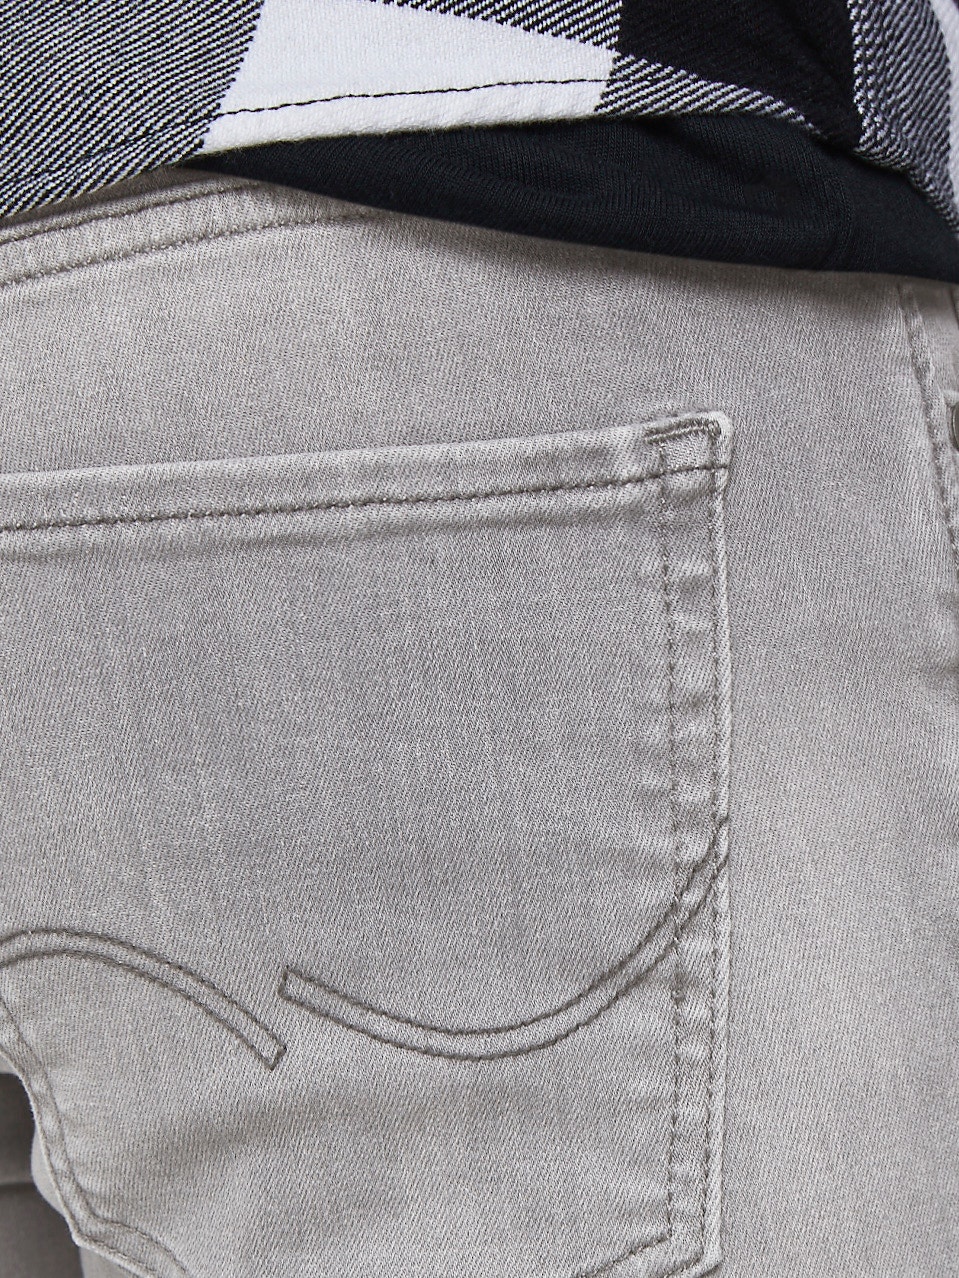 Jack & Jones JJILIAM JJORIGINAL AGI 003 Skinny fit jeans -Grey Denim - 12166846